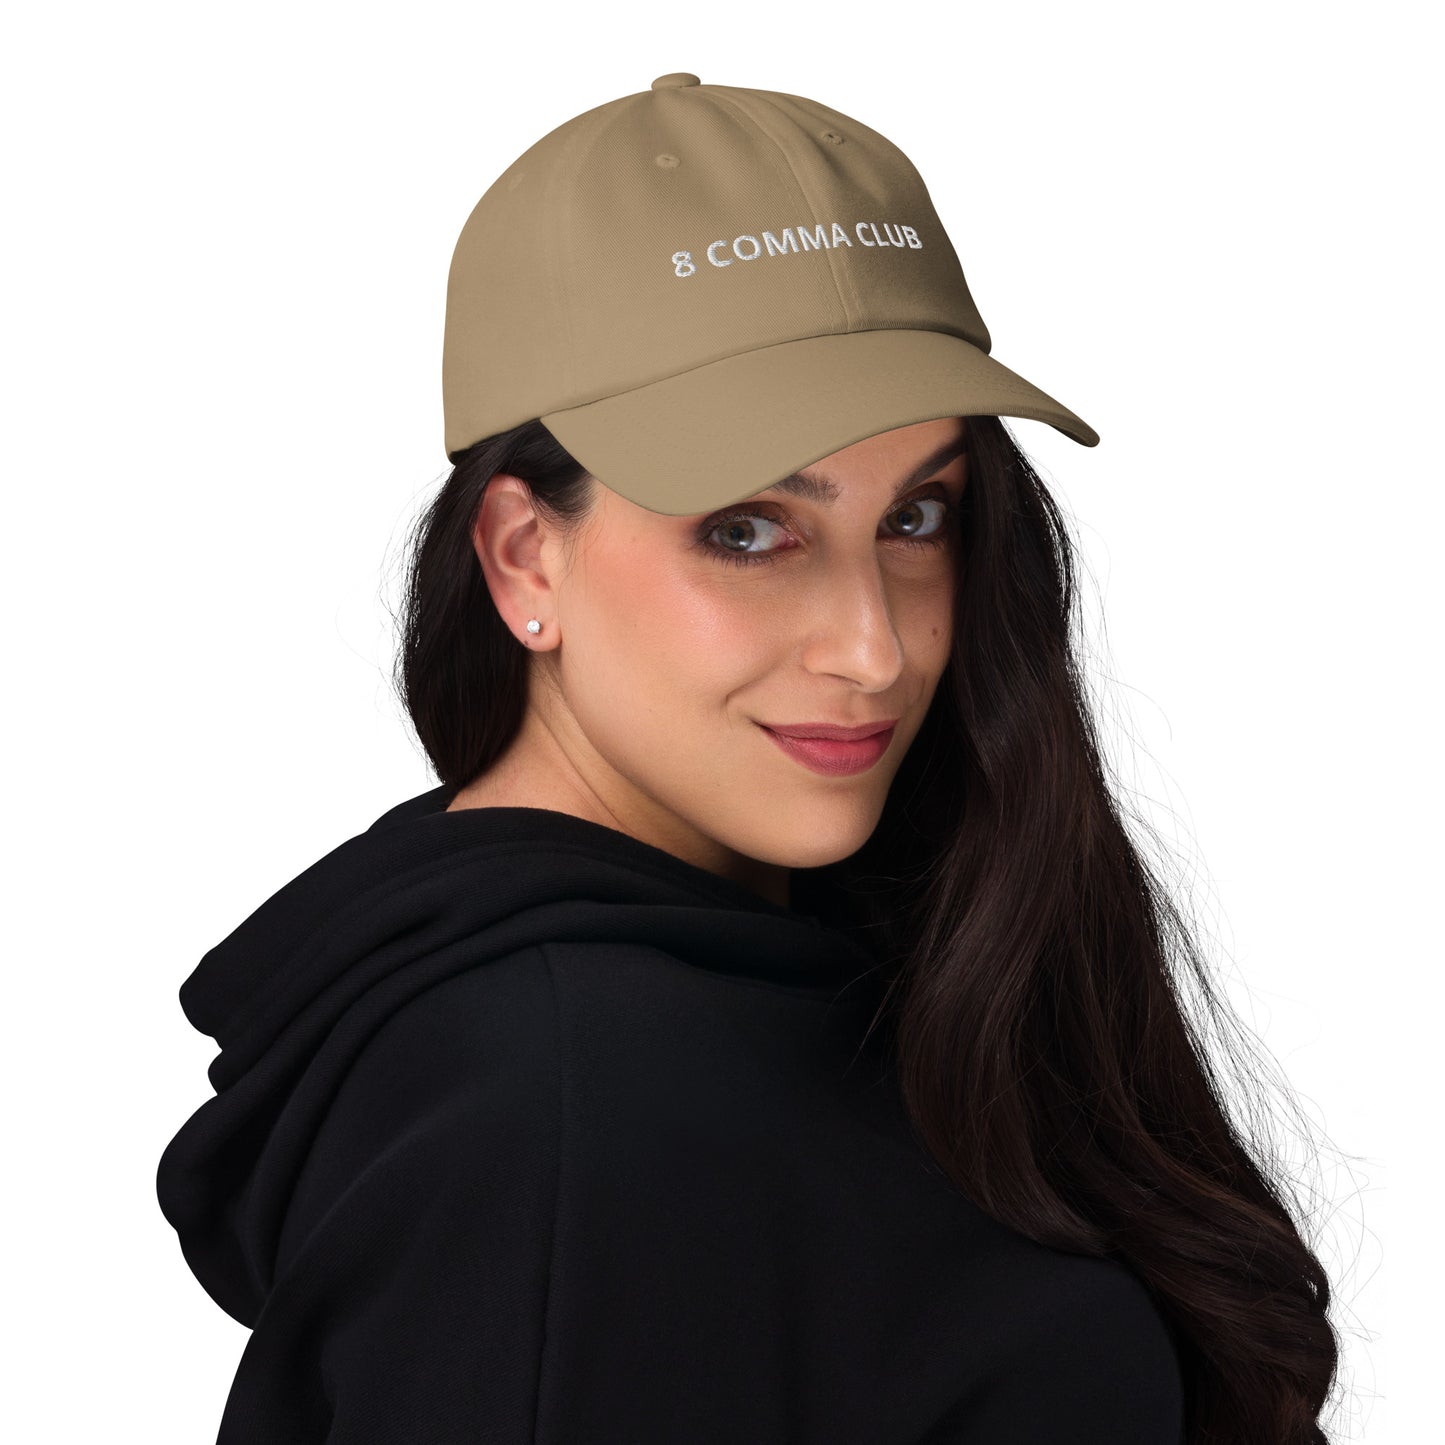 8 COMMA CLUB  hat